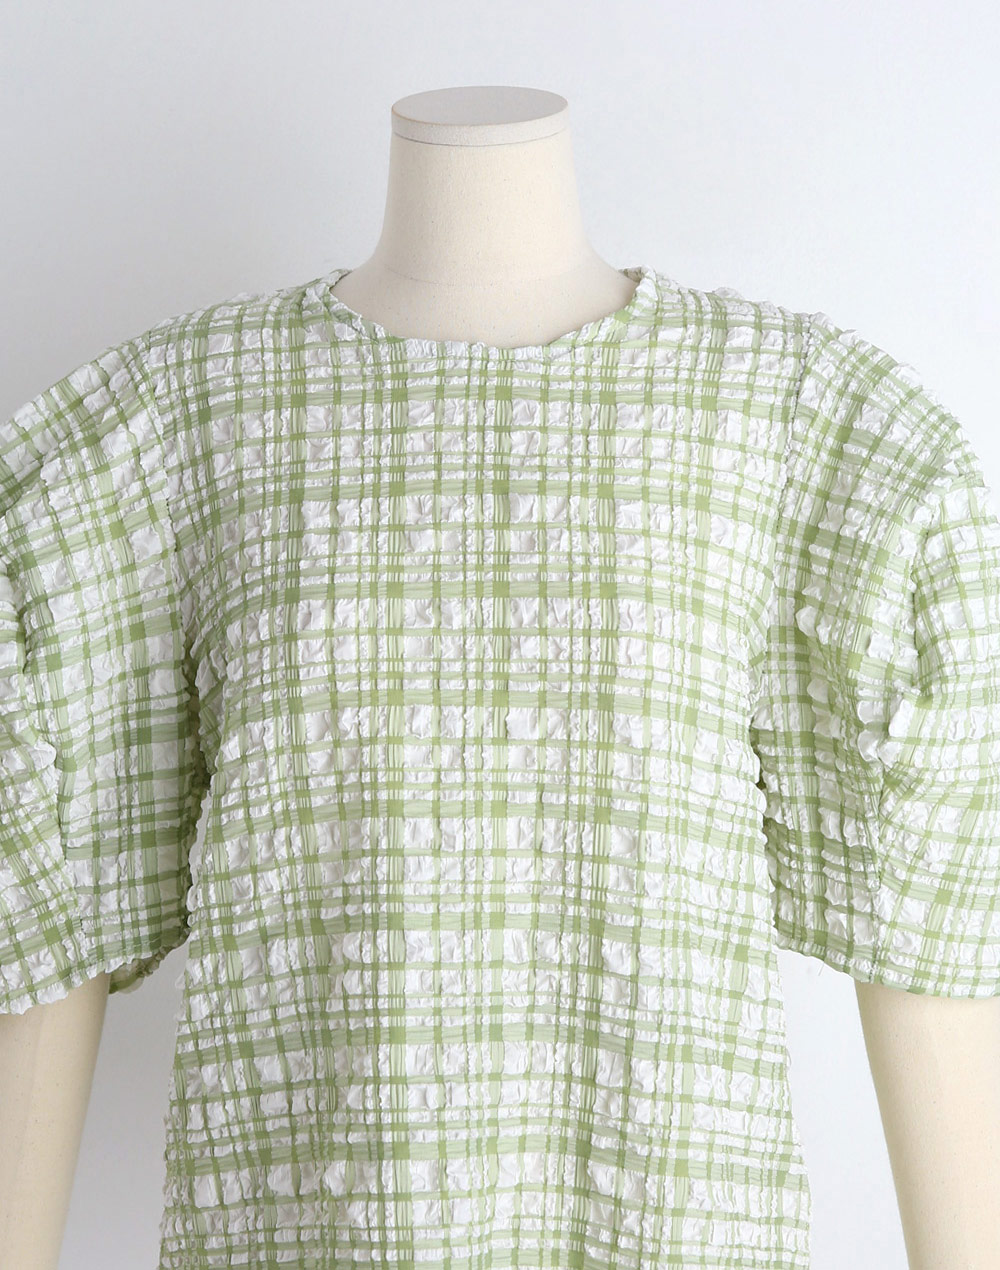 Ponpon blouse・b280578（ブラウス/ブラウス）| rirry_71 | 東京ガールズマーケット